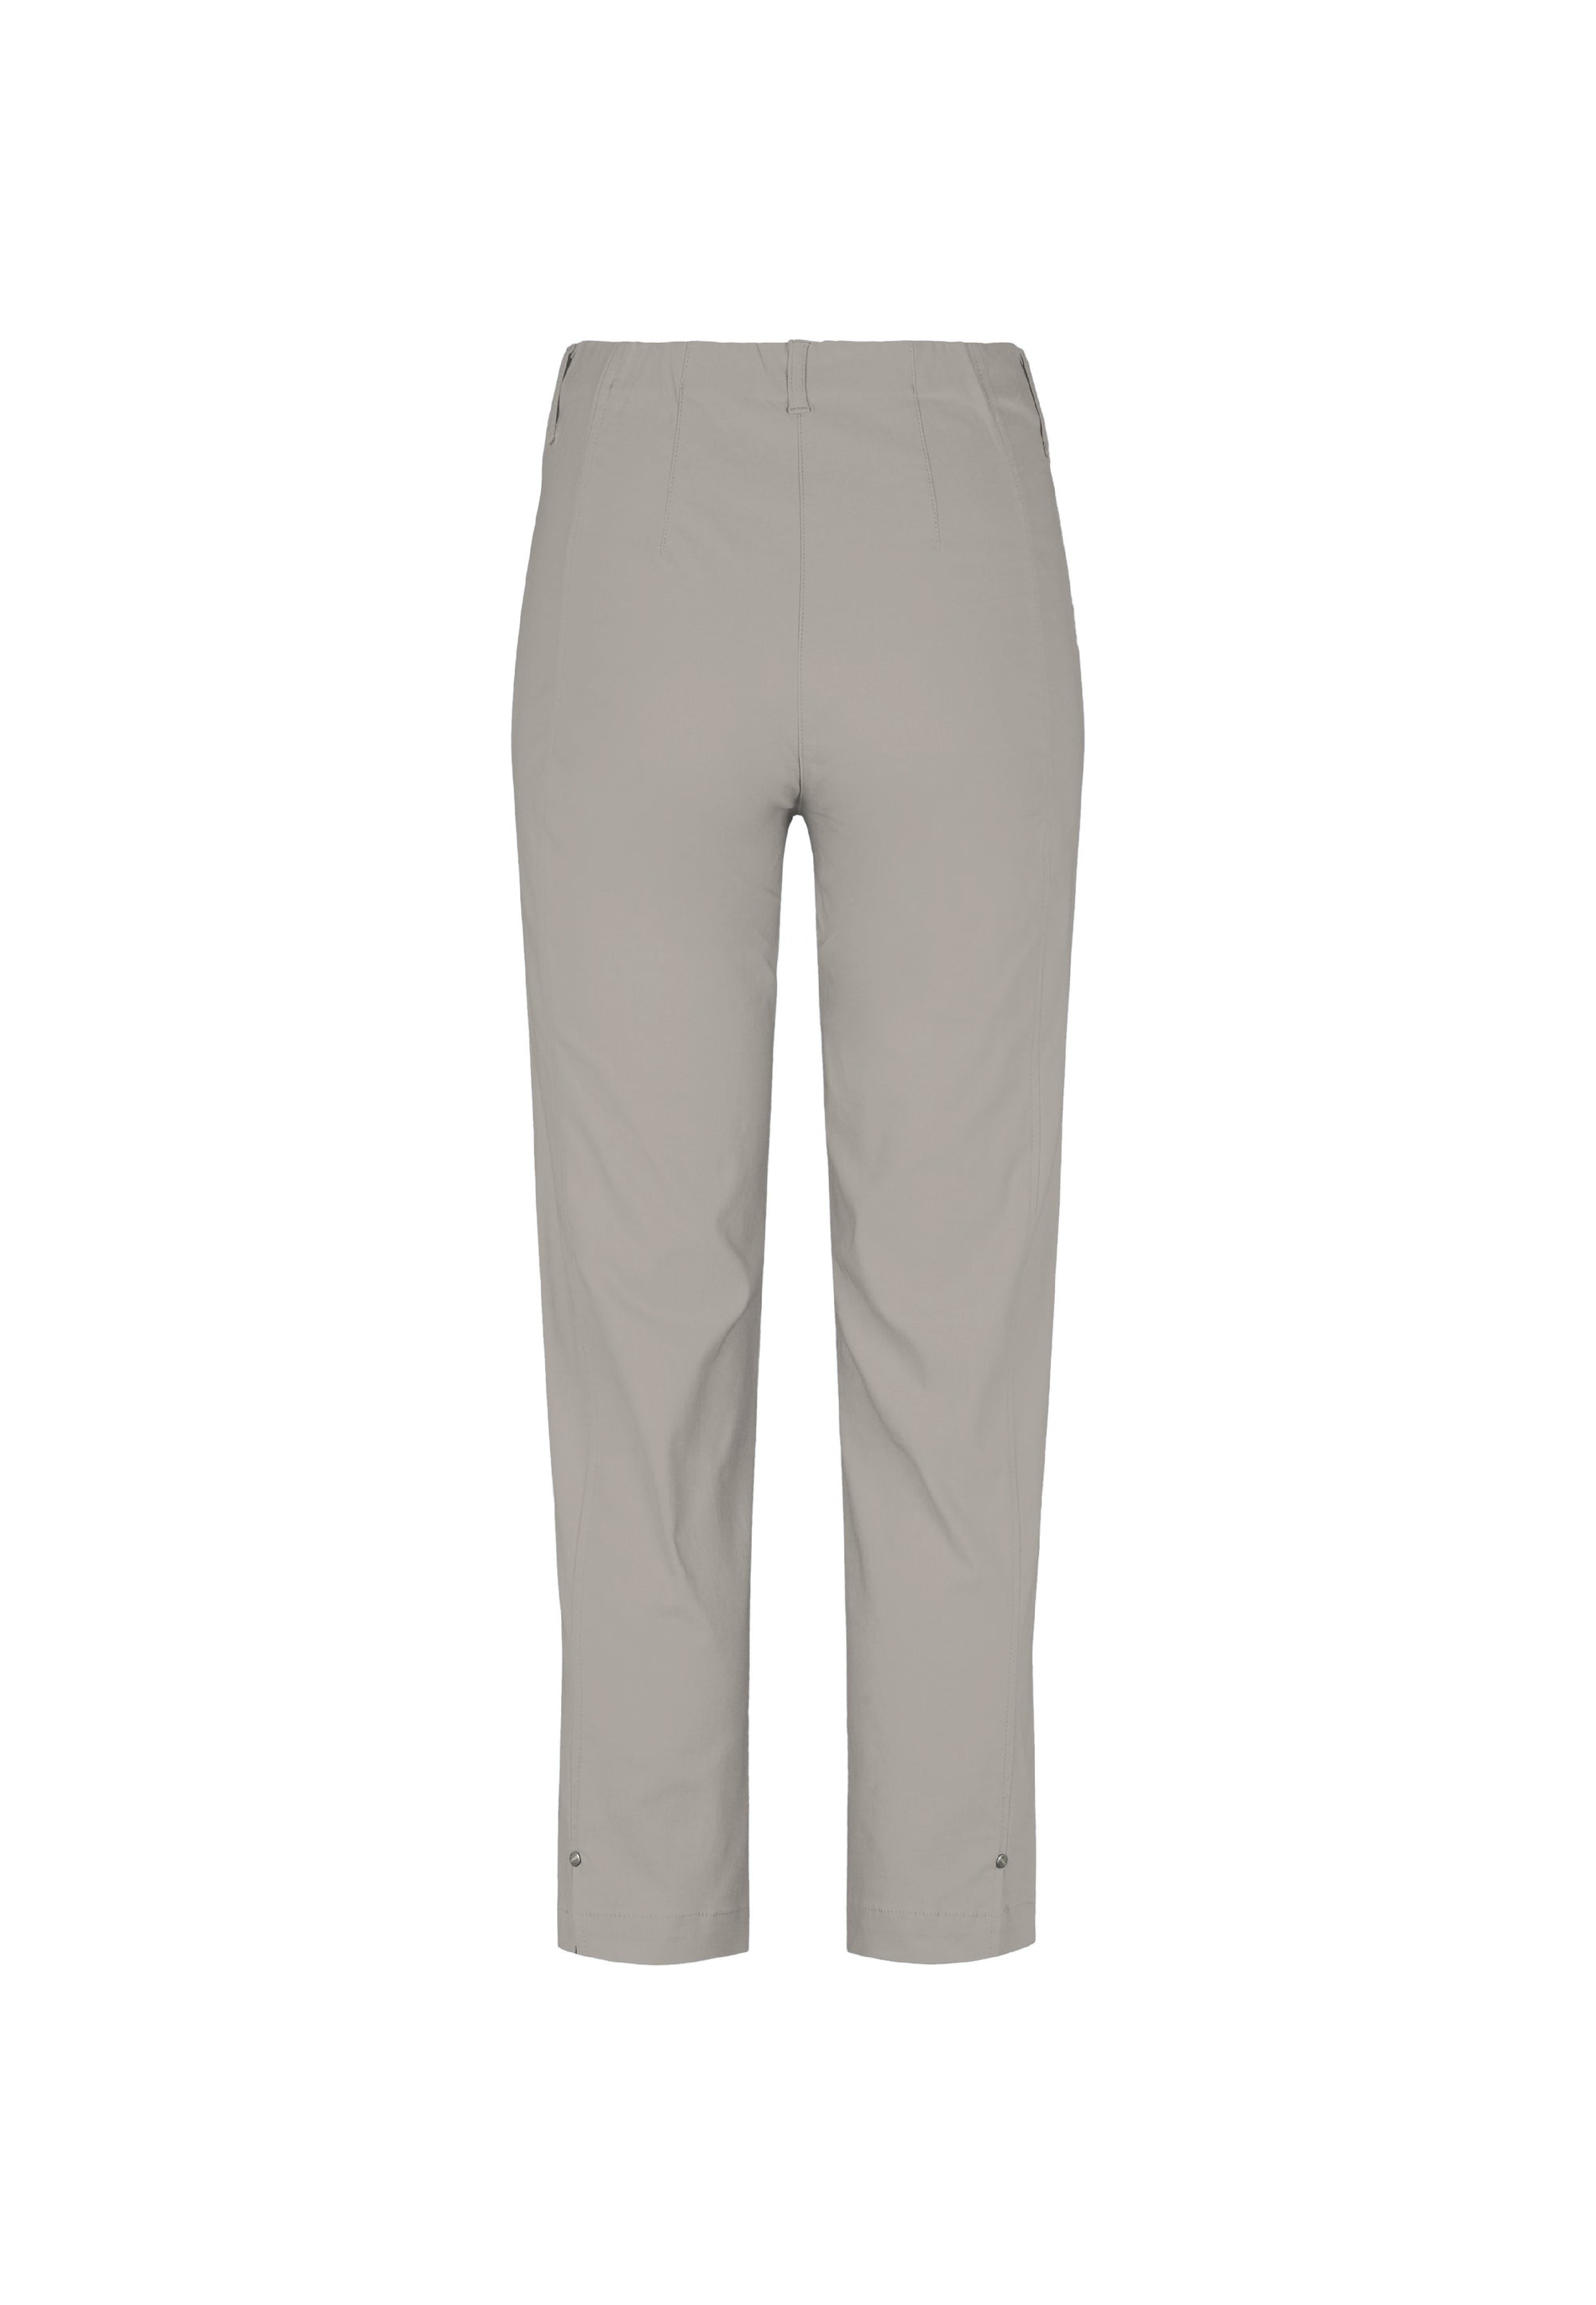 LAURIE Rose Regular Crop Trousers REGULAR 25137 Grey Sand